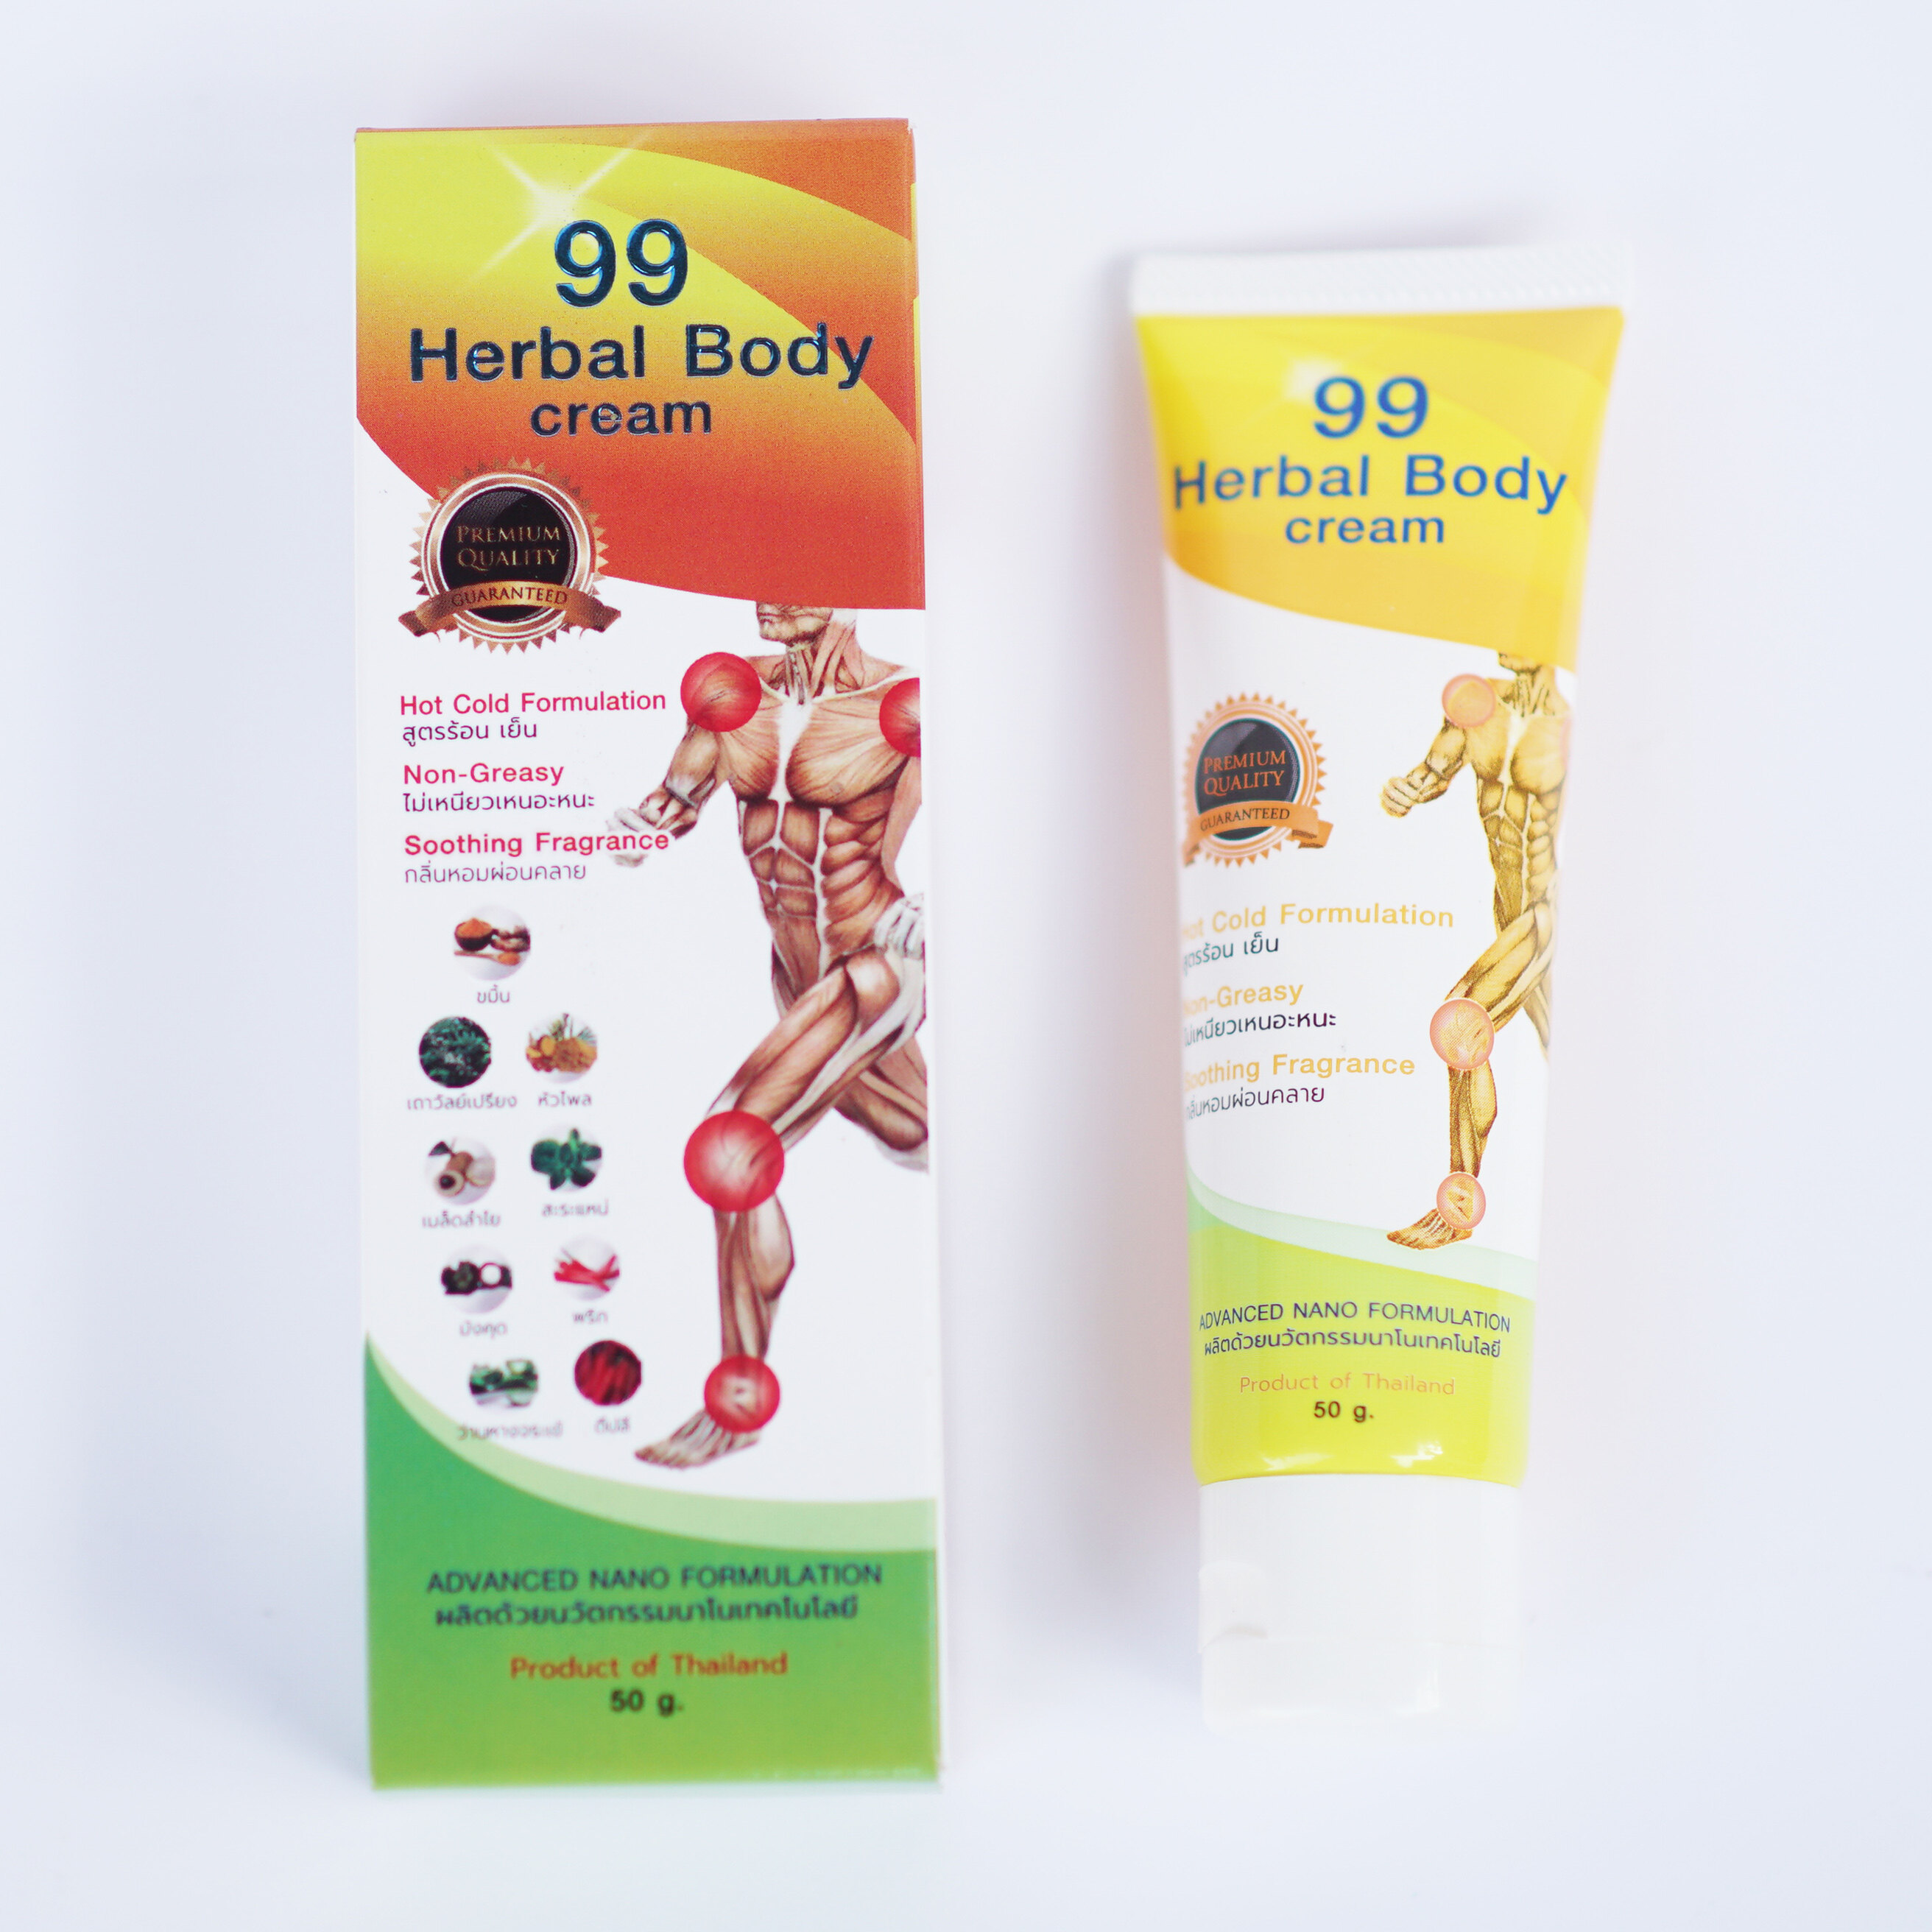 99 Herbal Body Cream ครีมทาสูตรร้อน -เย็น (2in1) นวัตกรรมนาโนครีม ร้อนนาน เหมาะสำหรับปวดกล้ามเนื้อ ปวดหลัง ปวดคอ ปวดไหล่